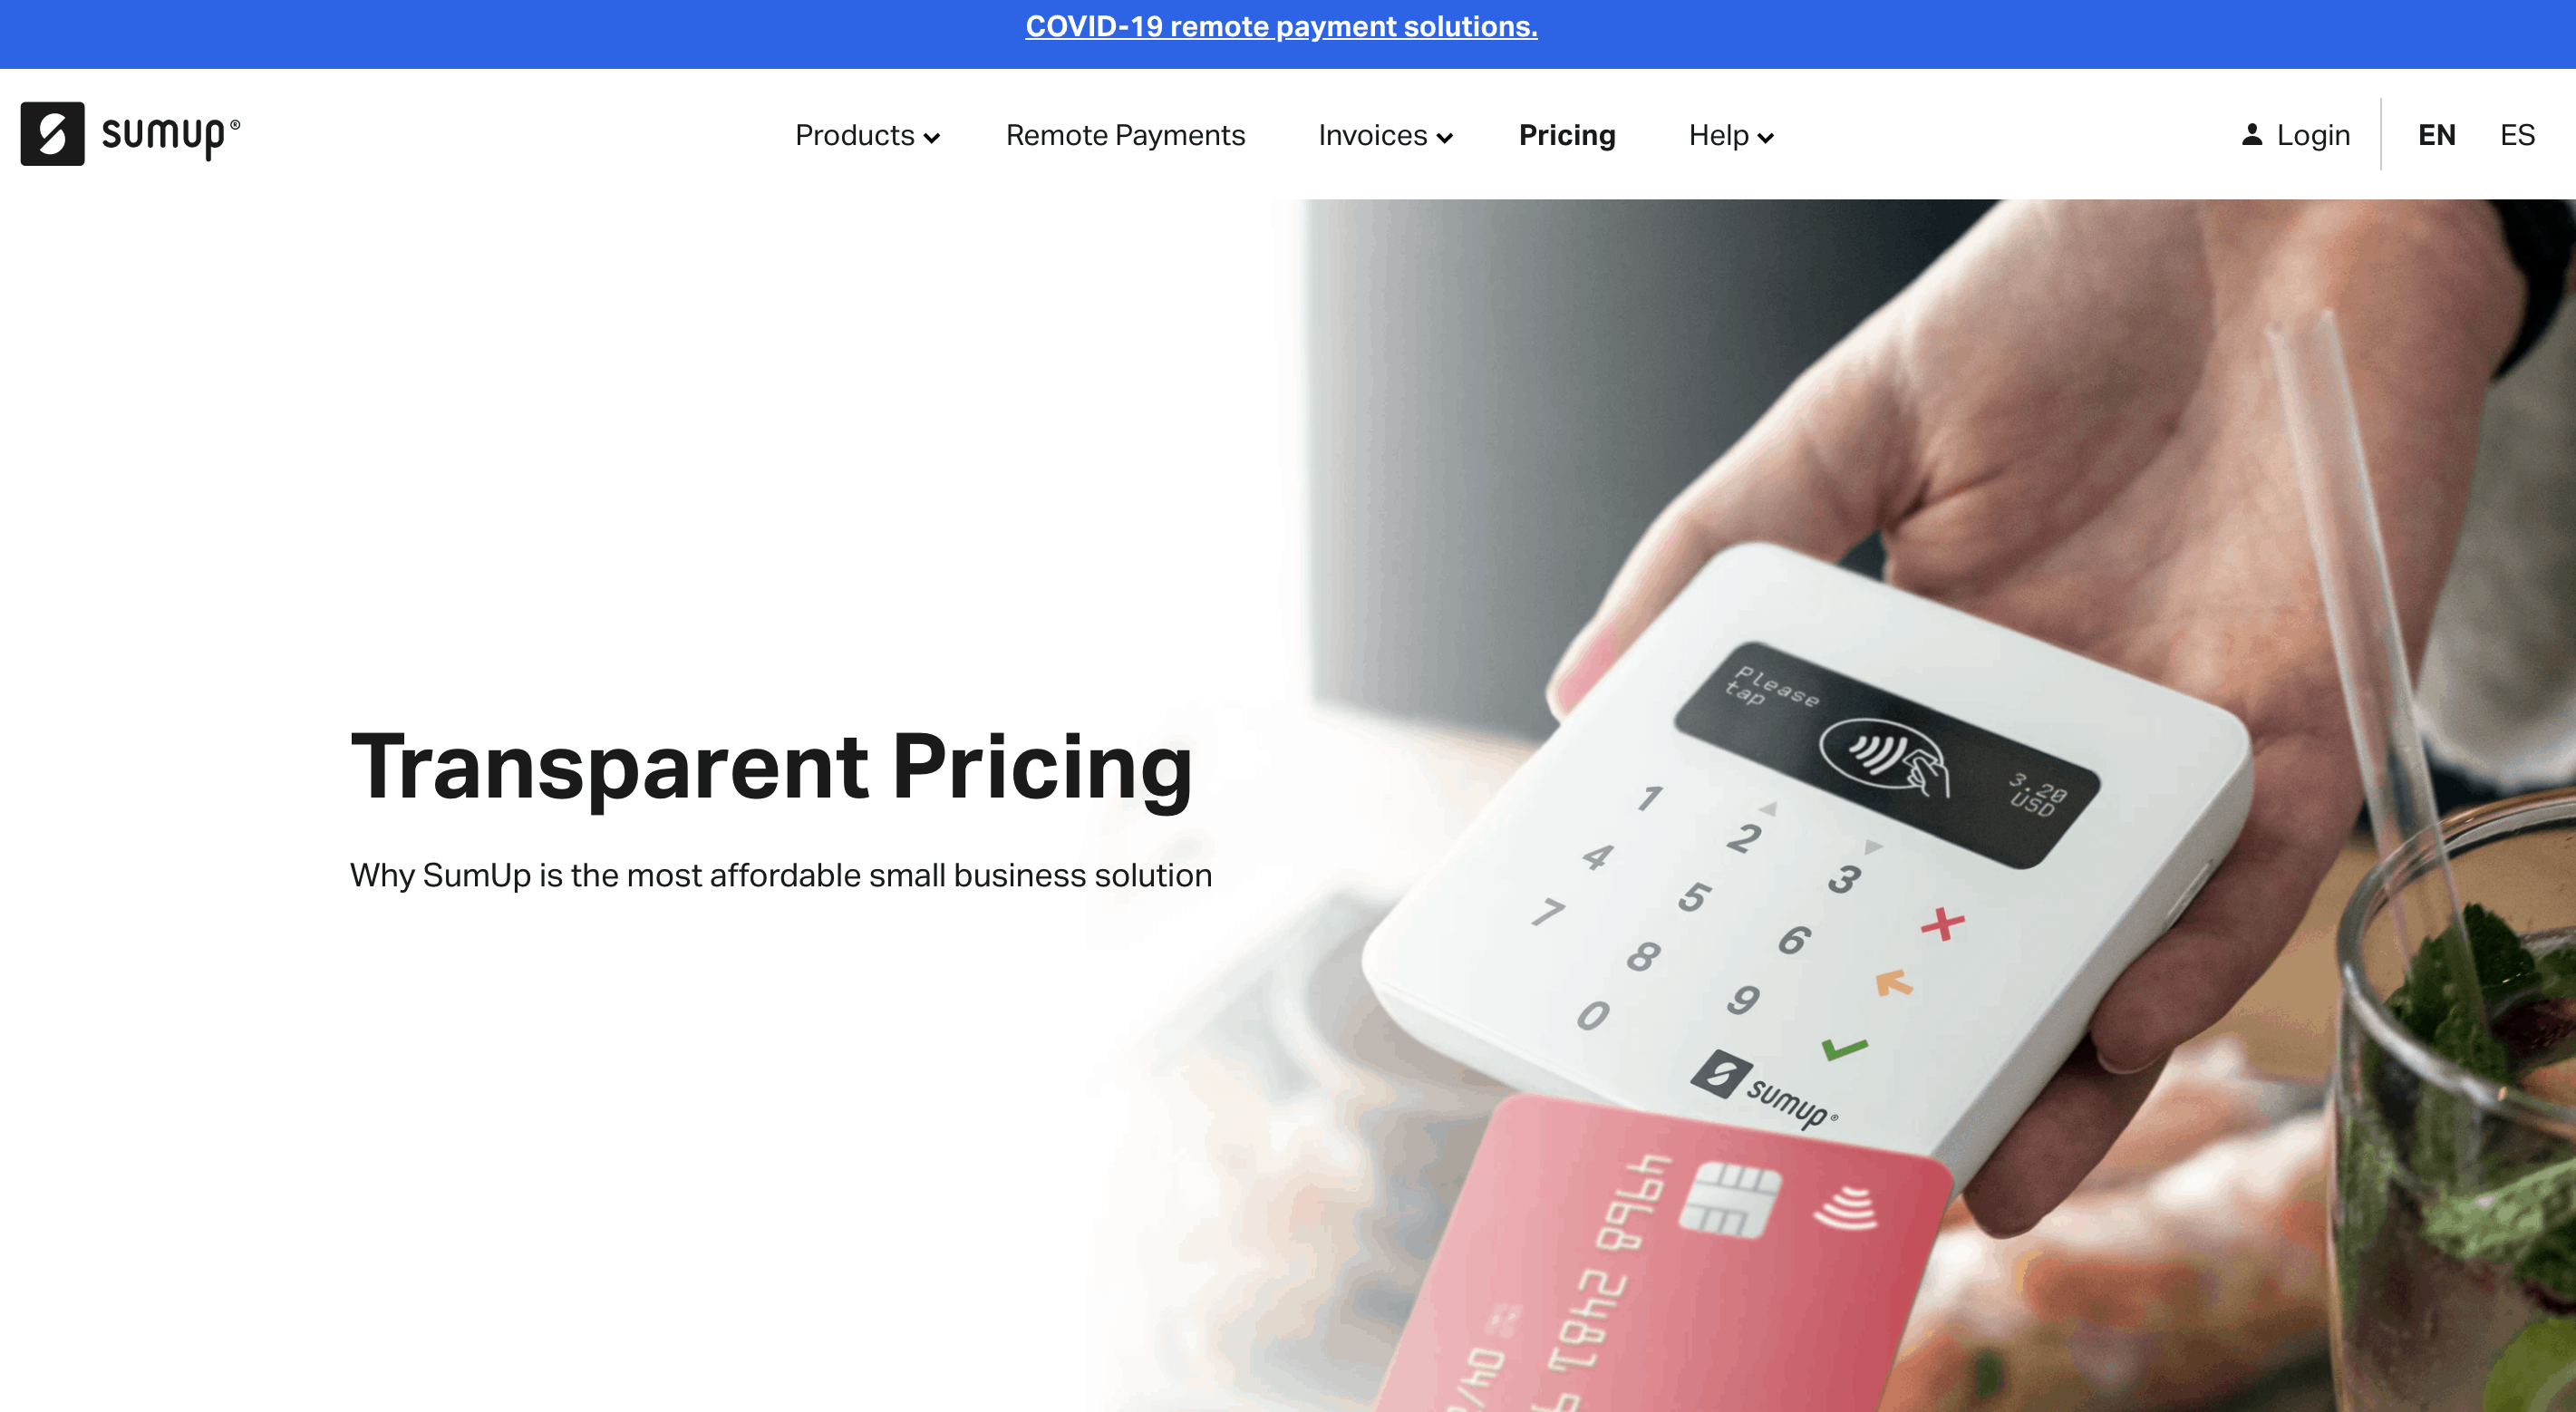 sumup website screenshot pricing page